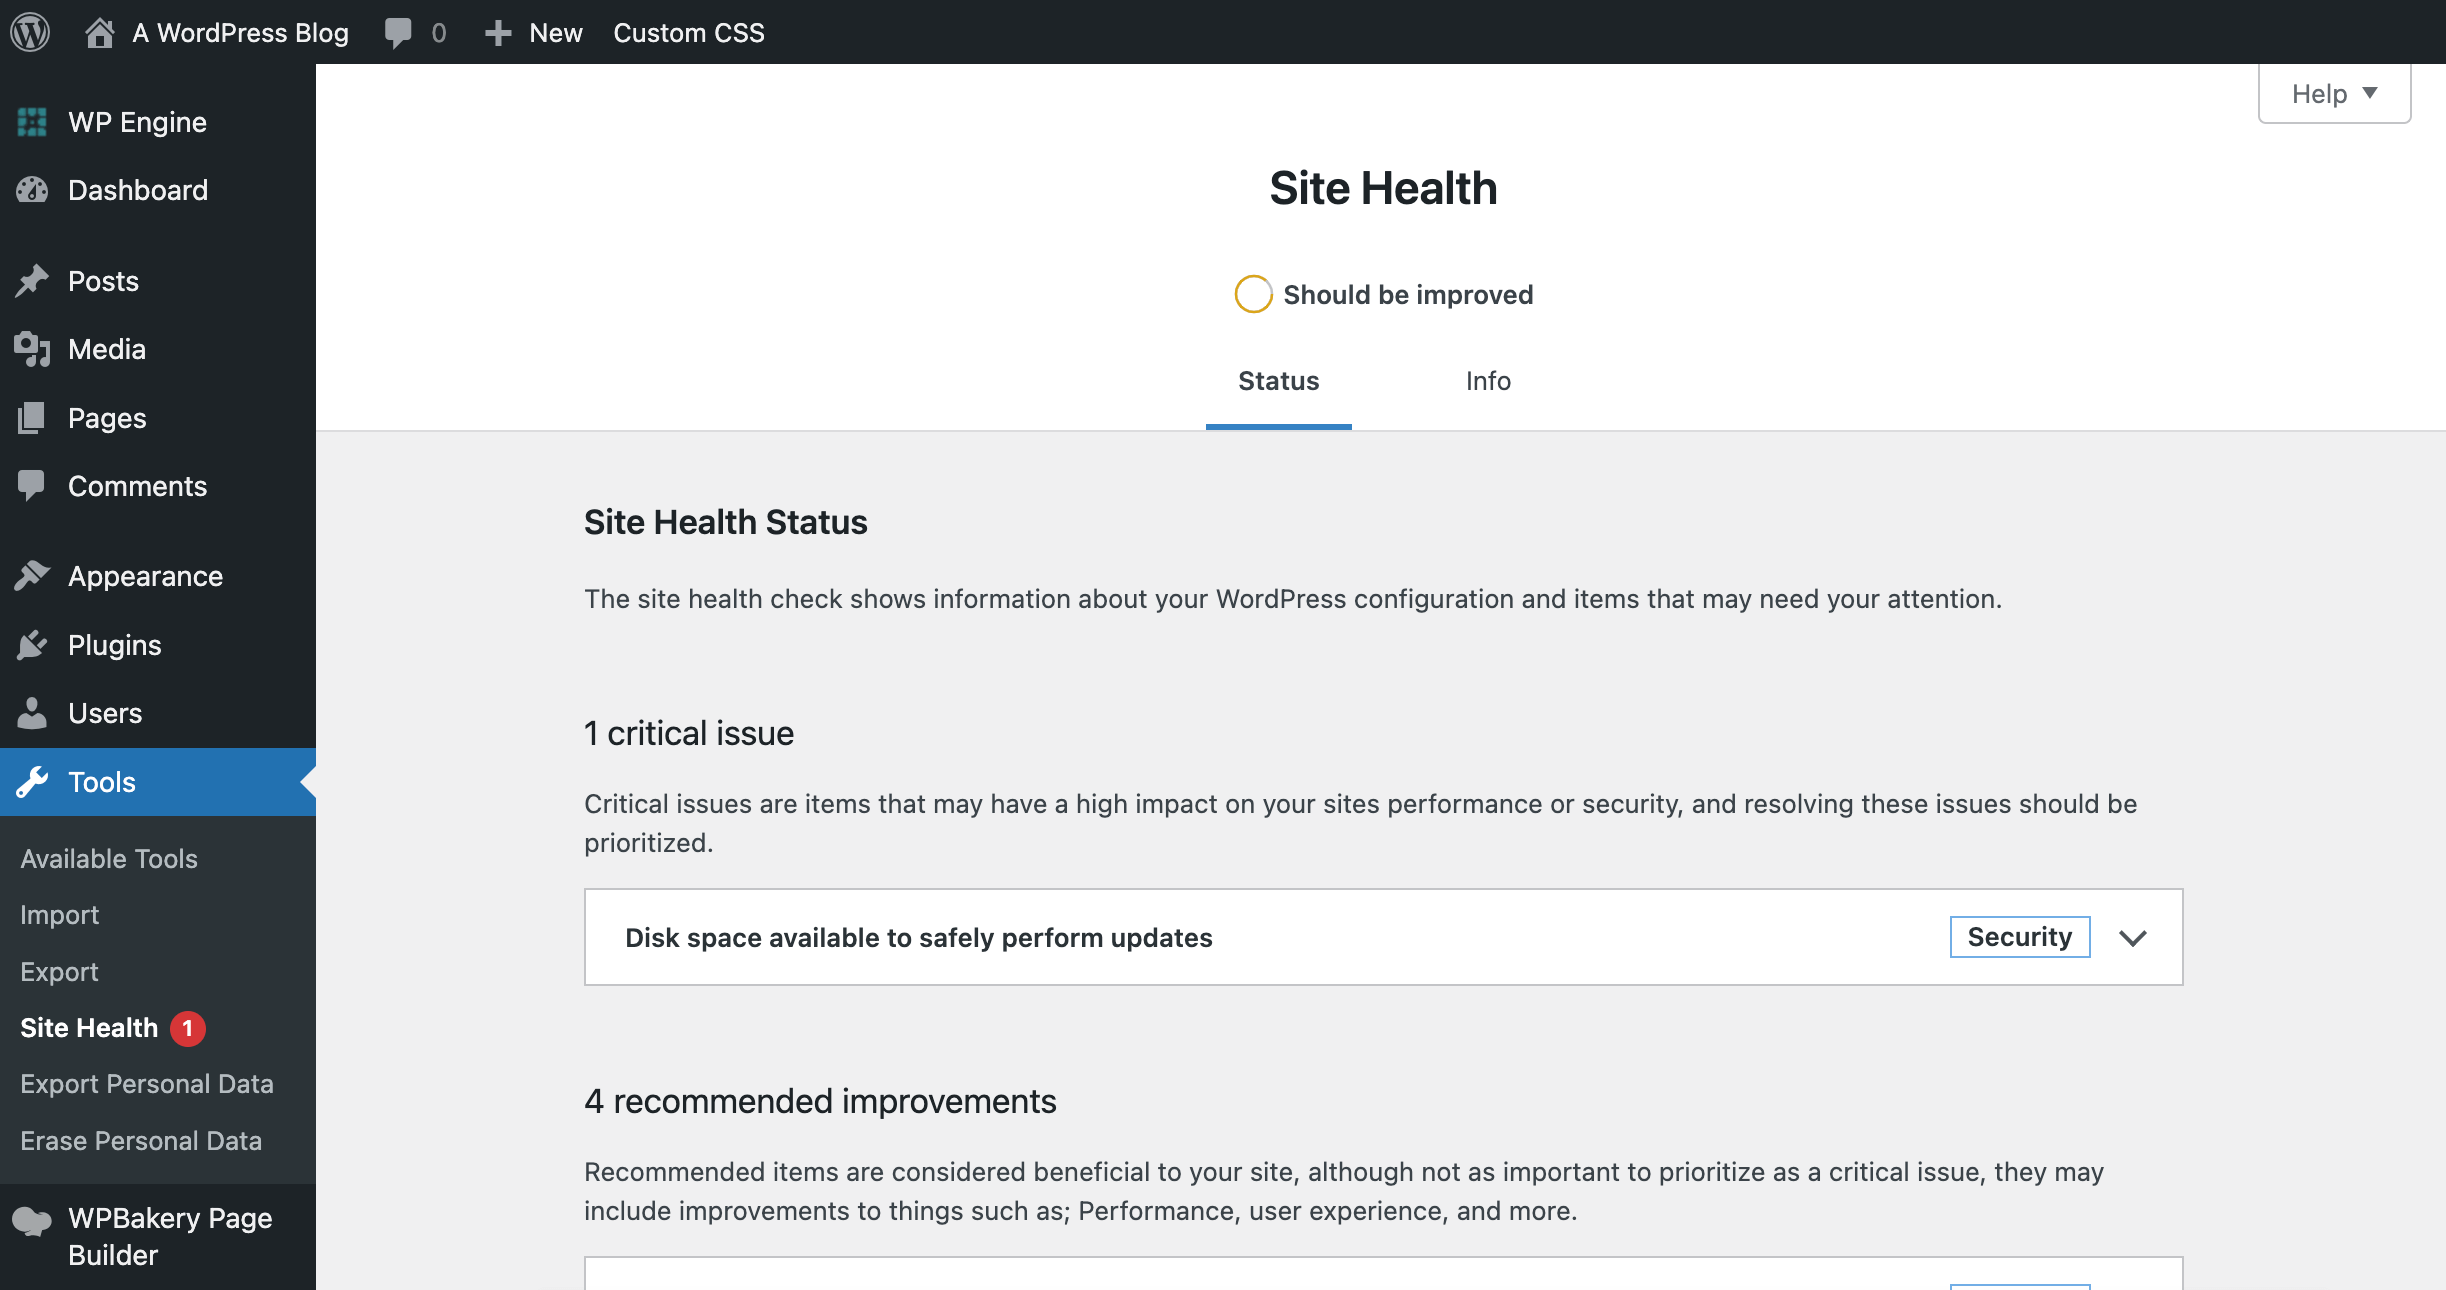 WordPress Dashboard: Site Health